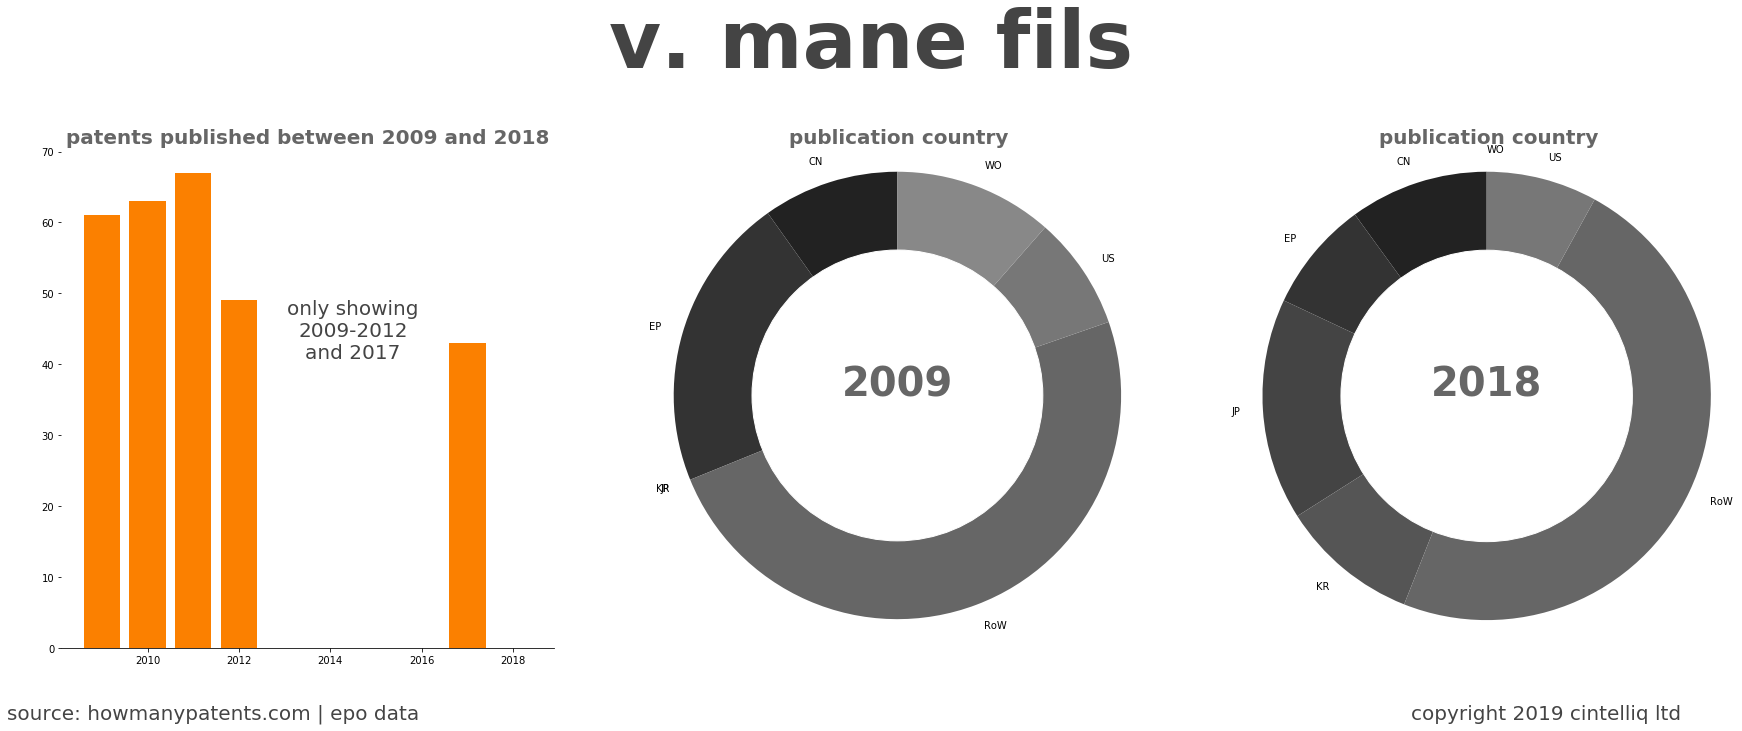 summary of patents for V. Mane Fils